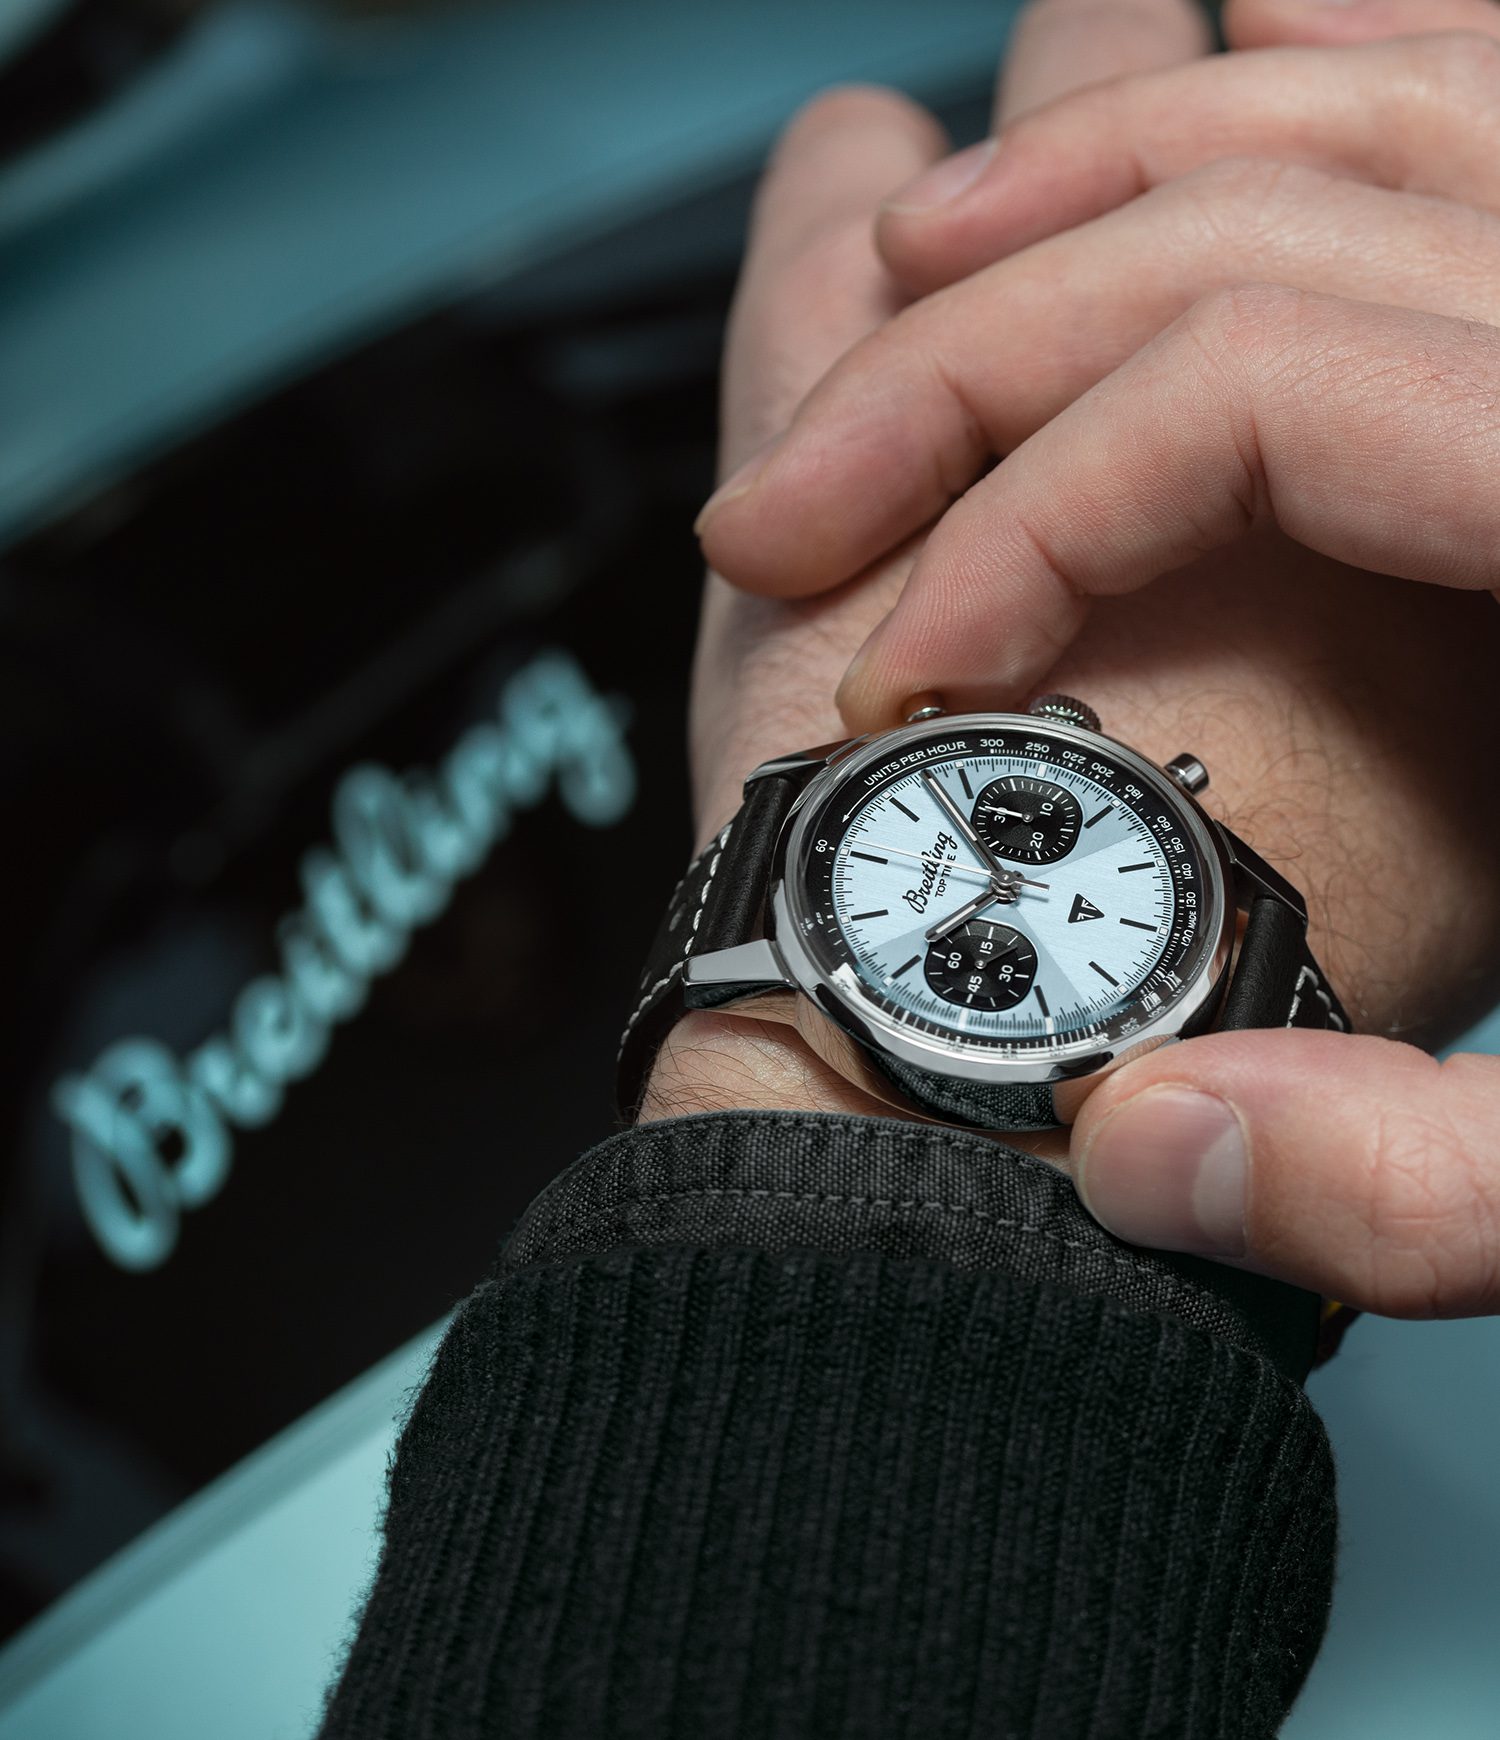 Breitling Top Time Triumph Captures the Spirit of Vintage